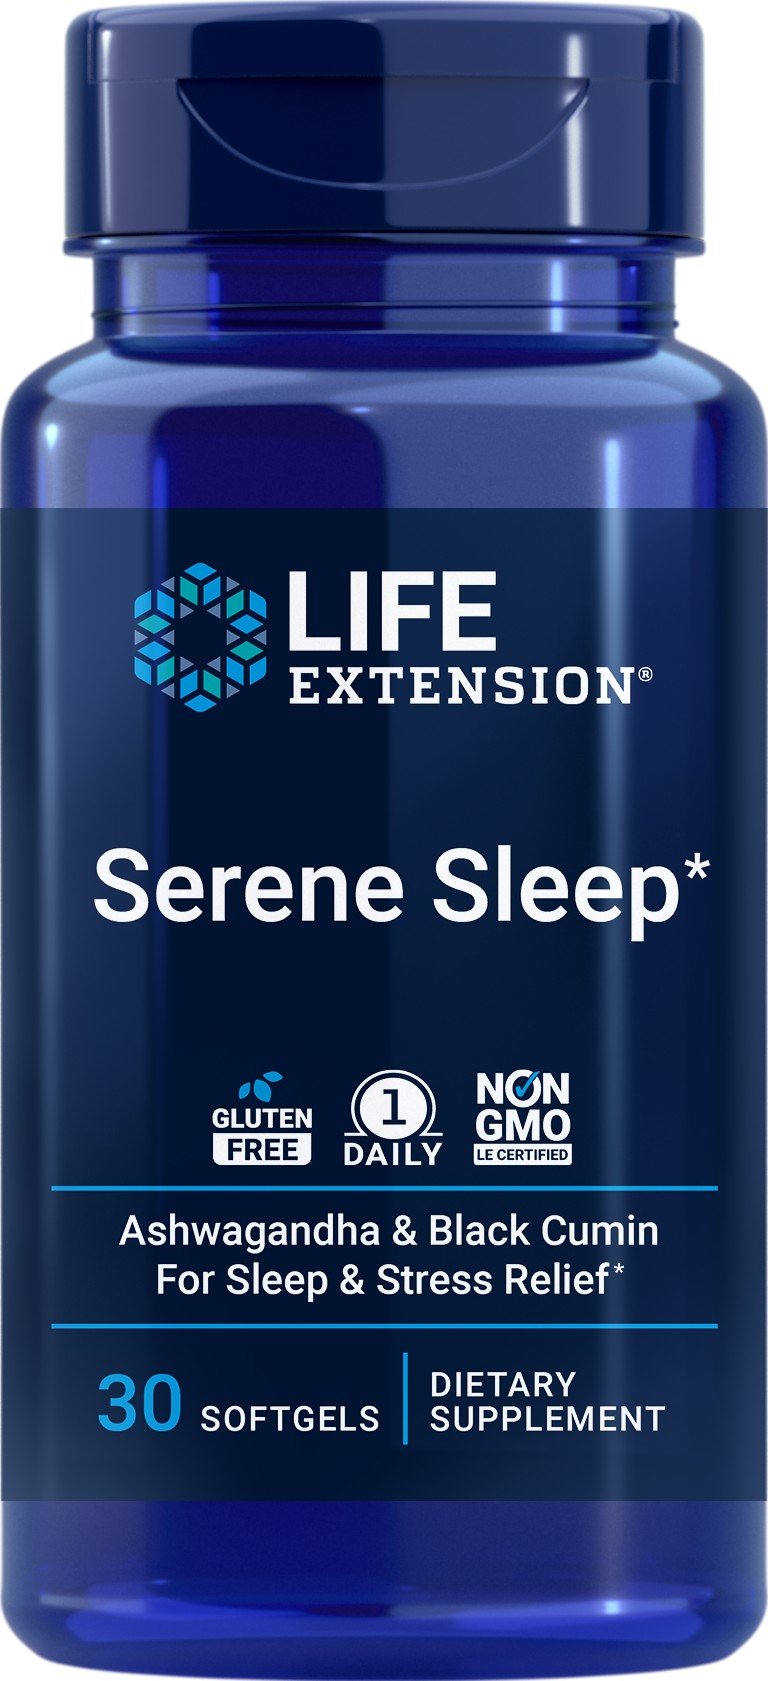 Life Extension Serene Sleep 30 Softgel